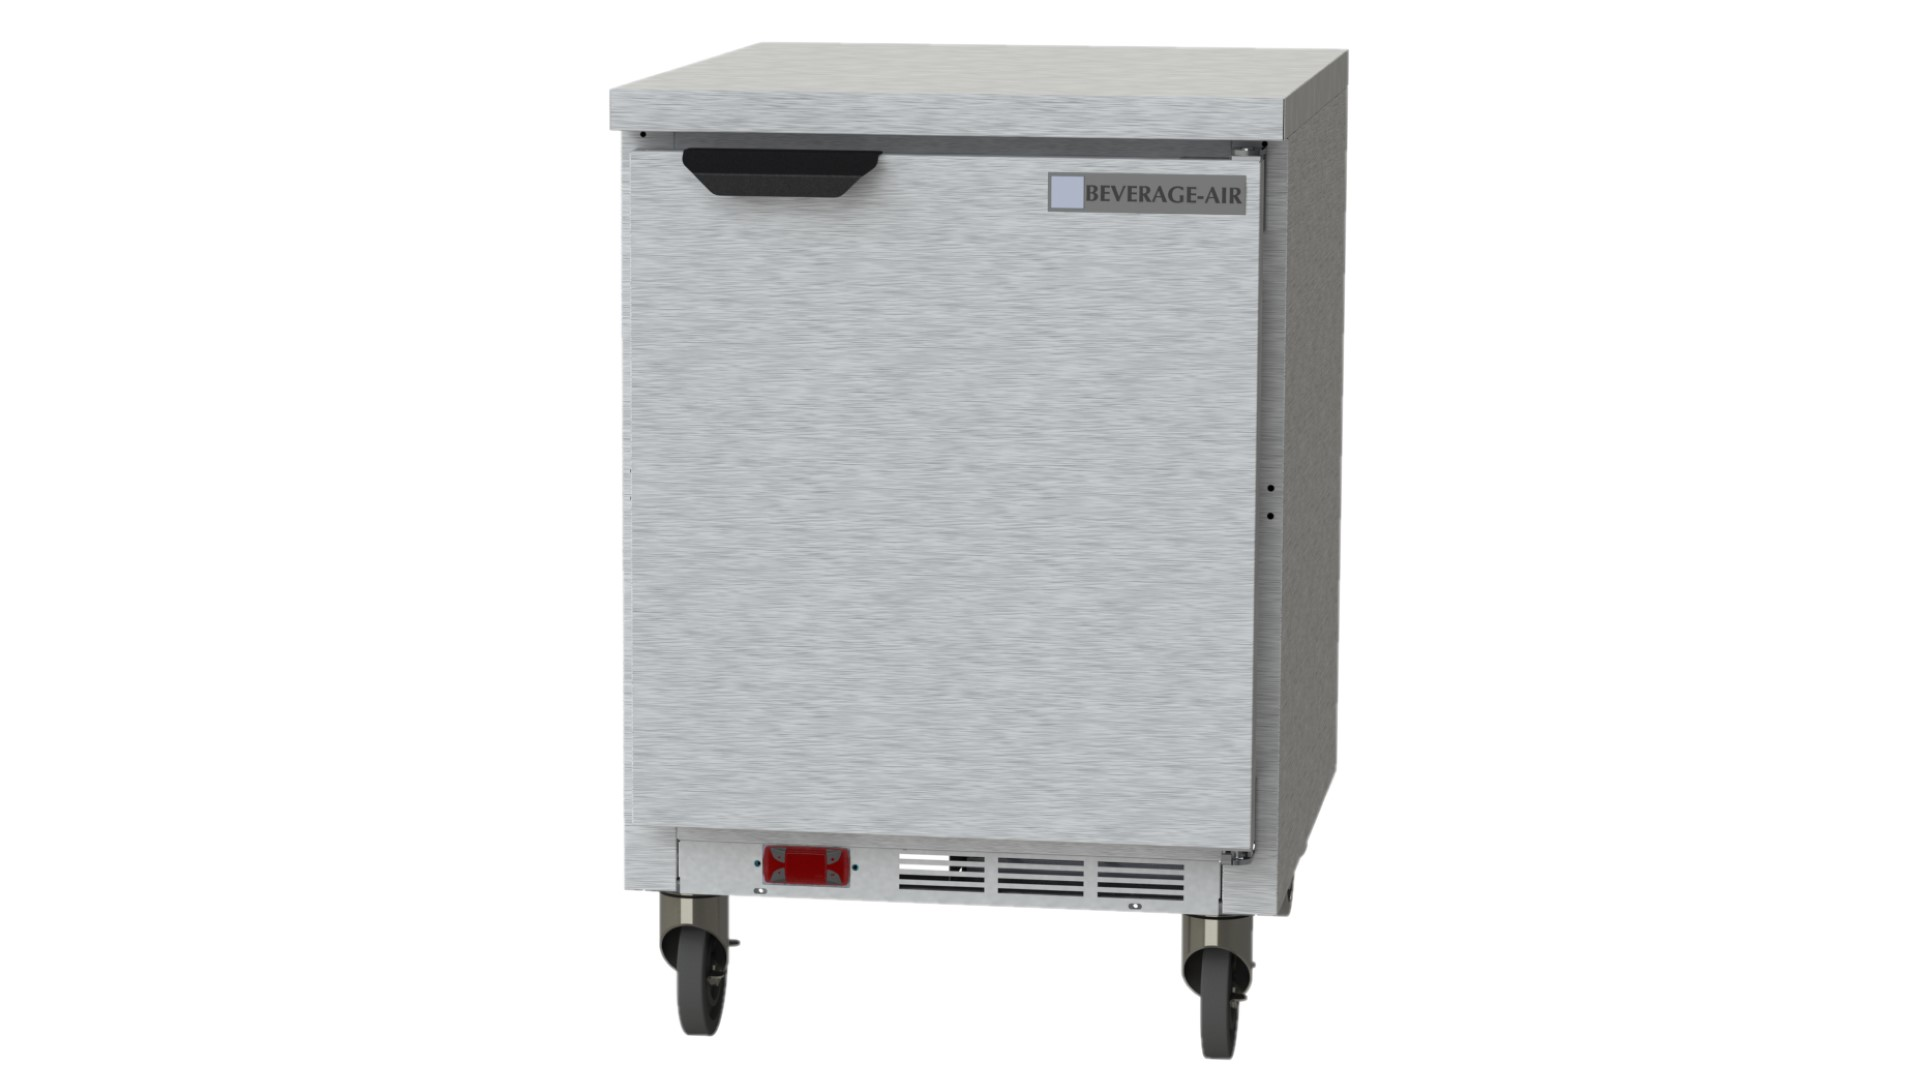 Beverage Air WTR24AHC-FLT Worktop Refrigerator 24"